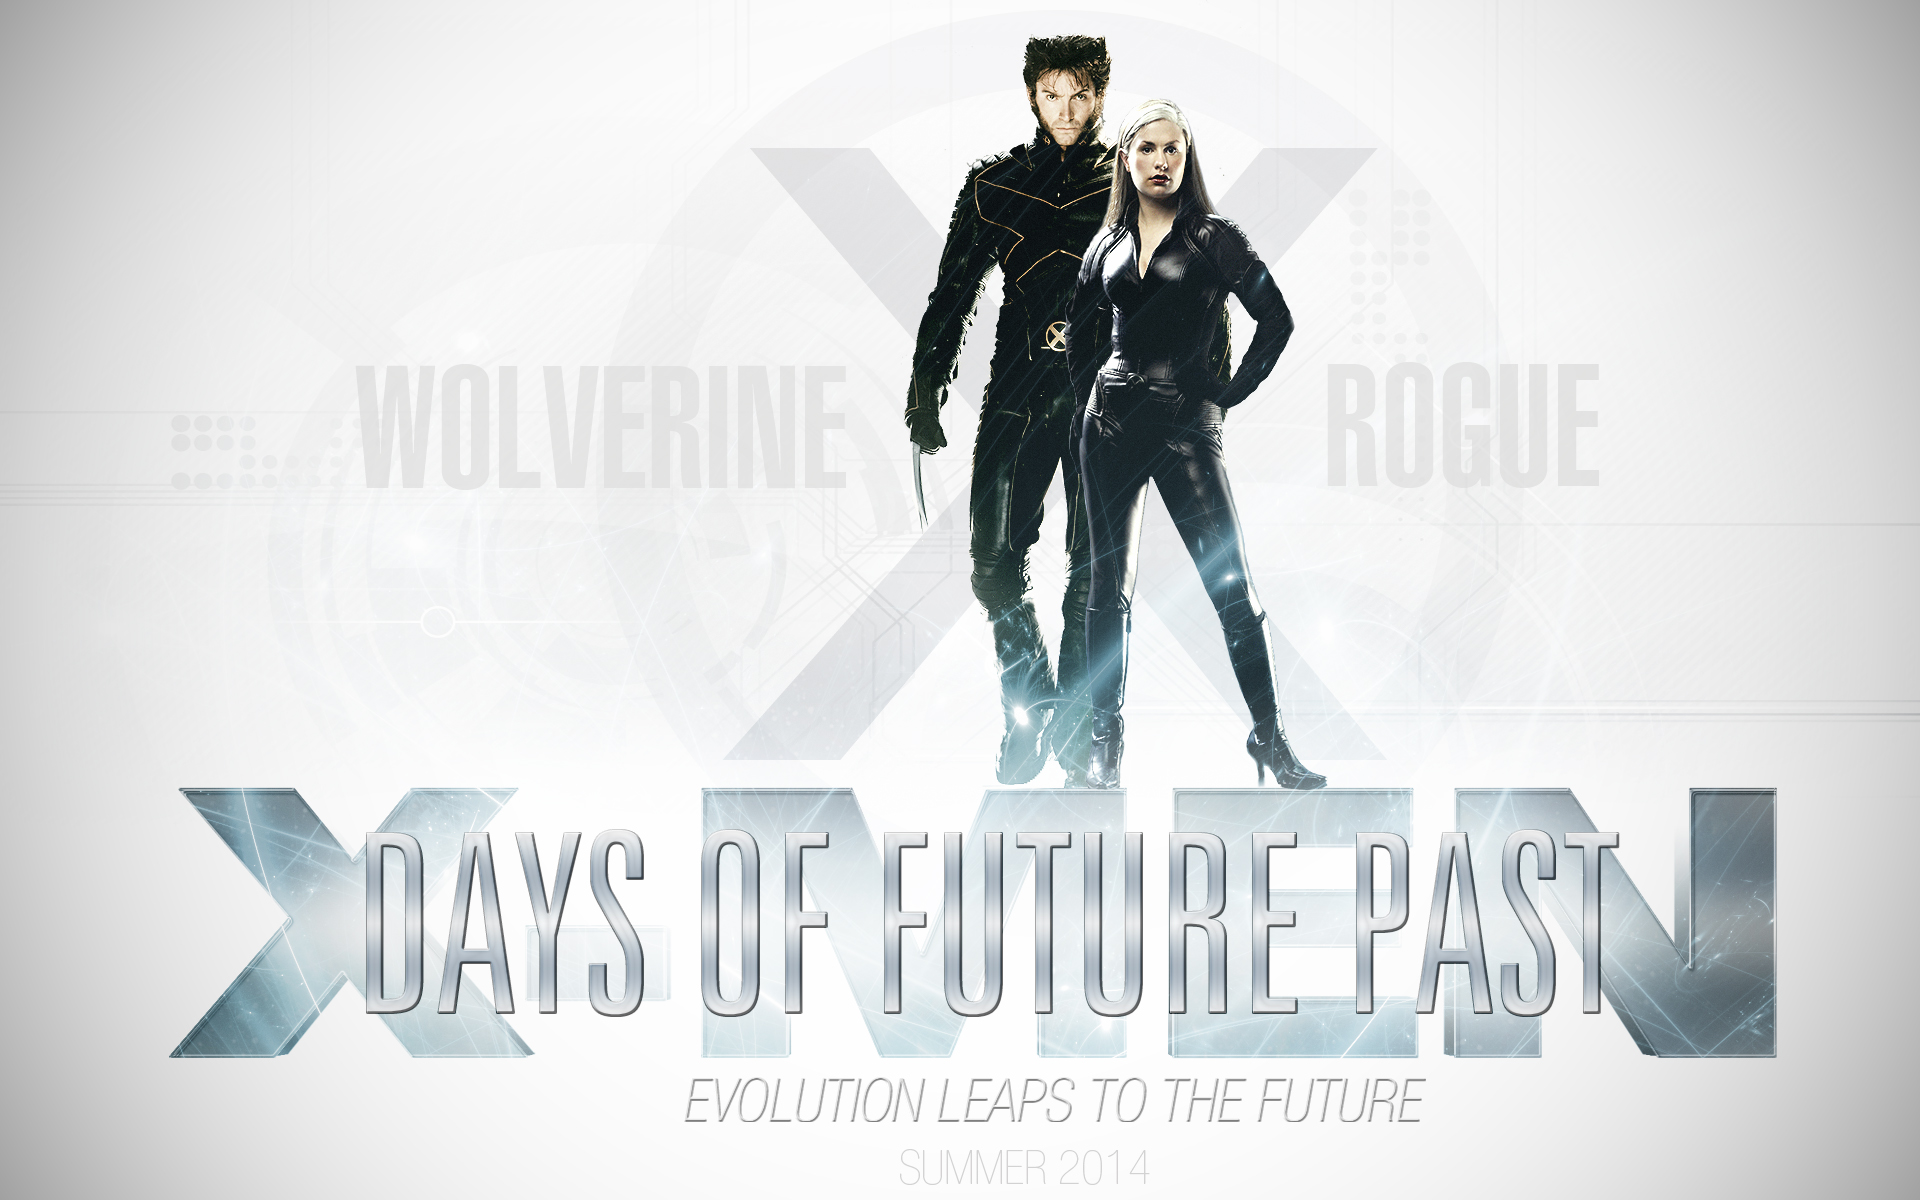 x men: days of future past, movie, rogue (marvel comics), wolverine, x men